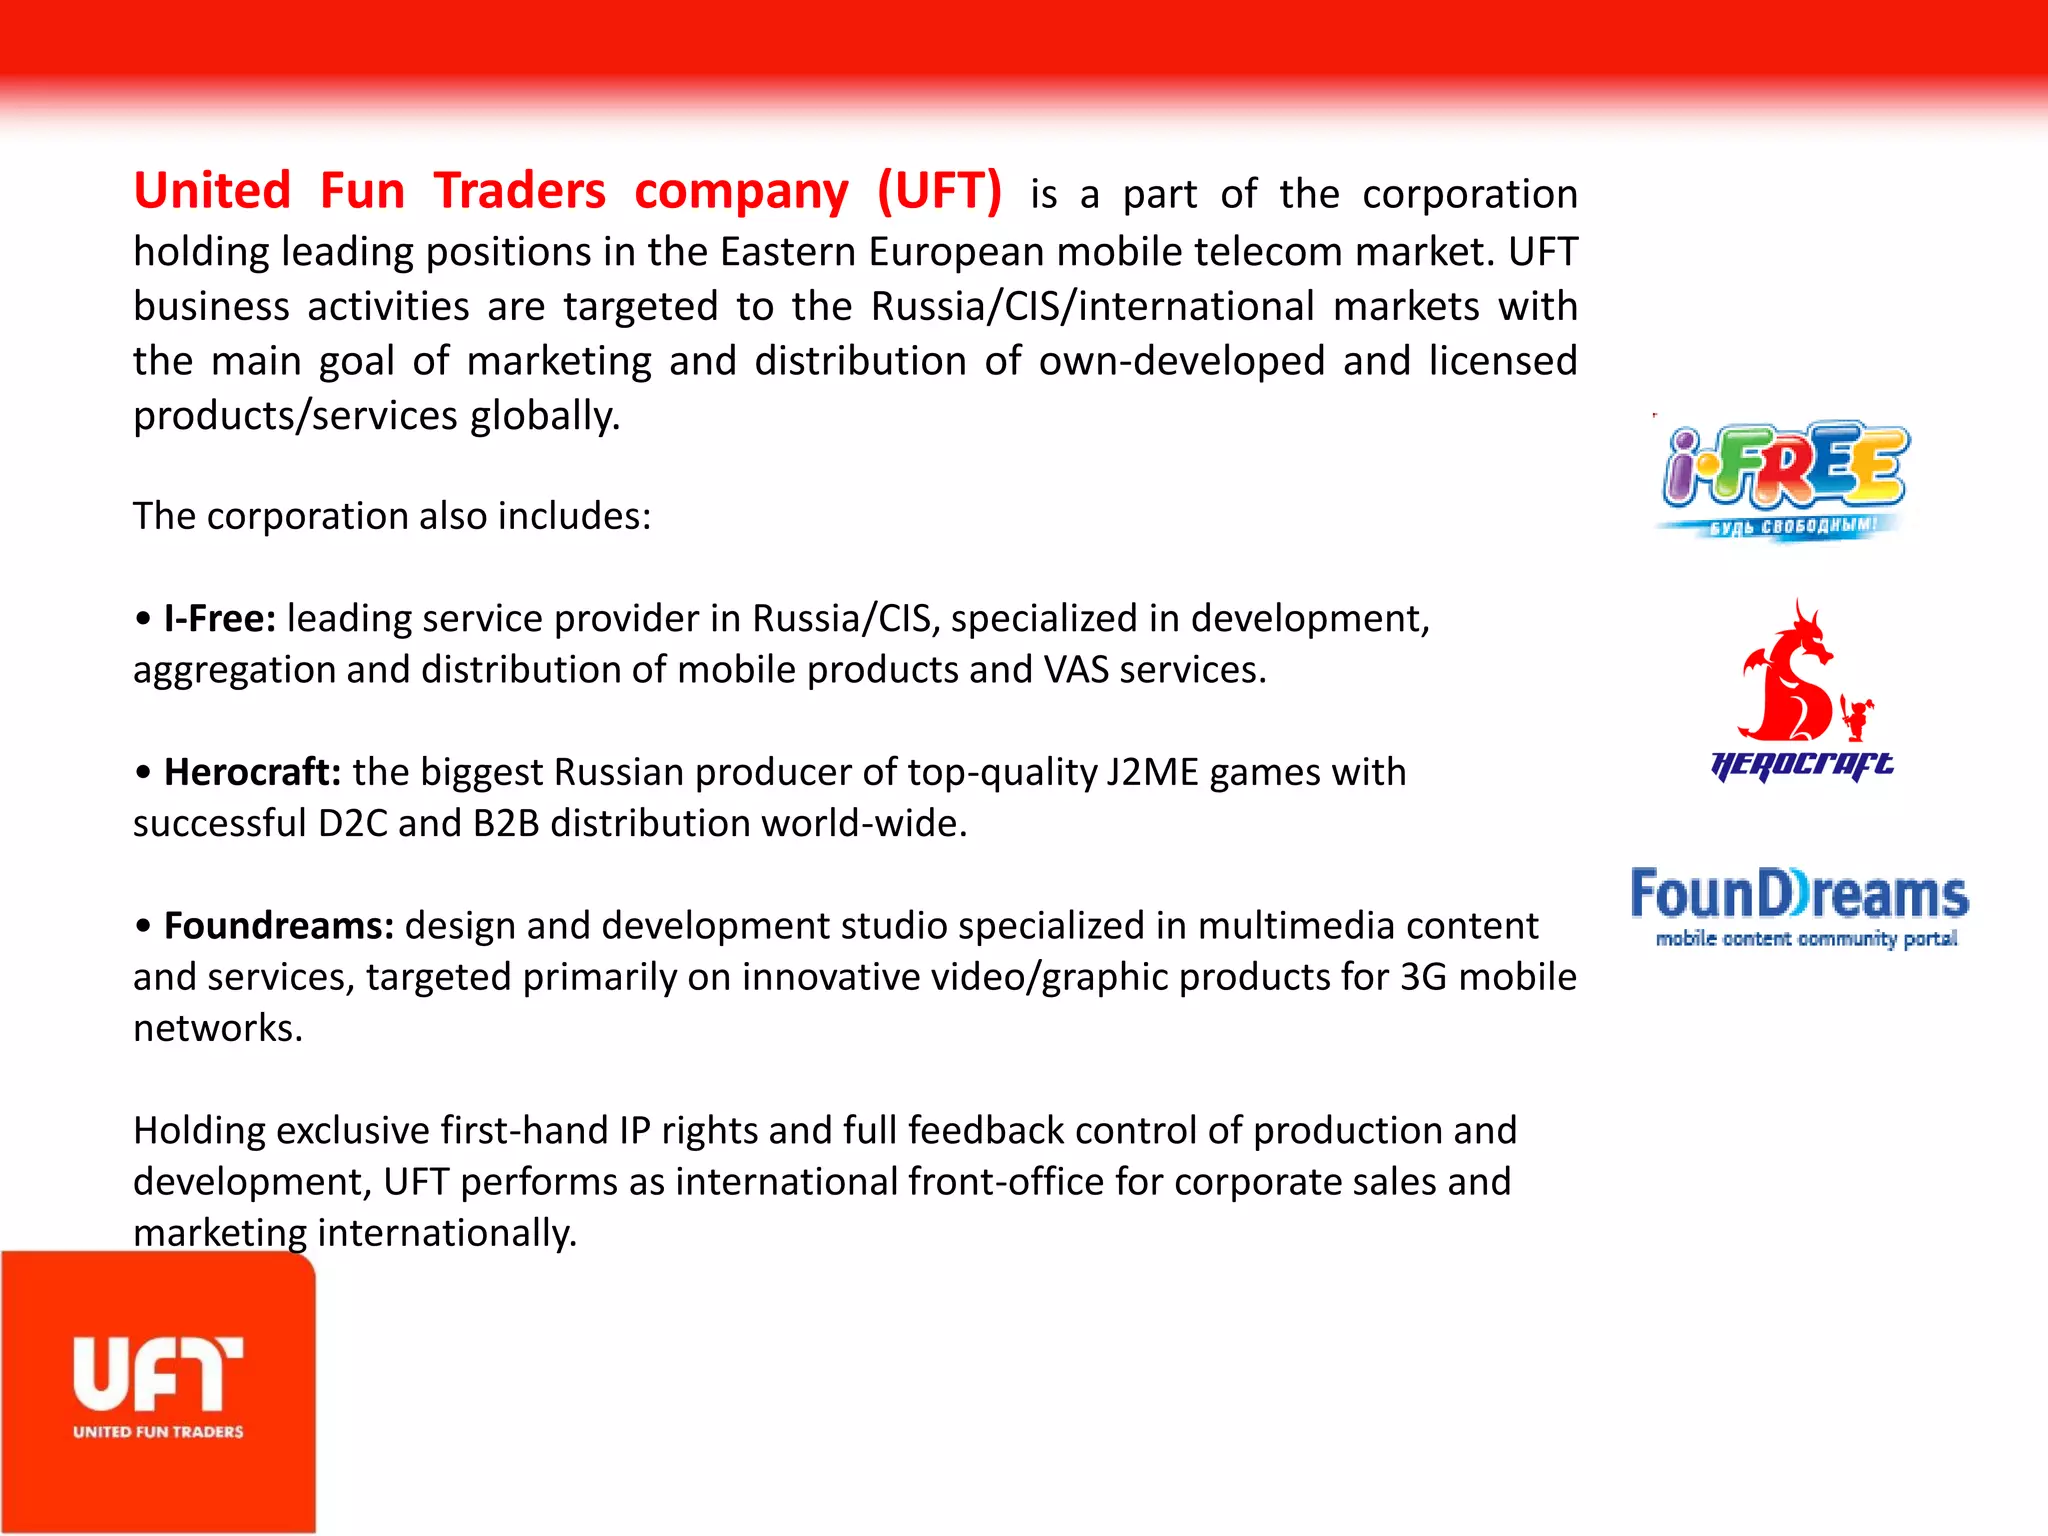 UFT company presentation